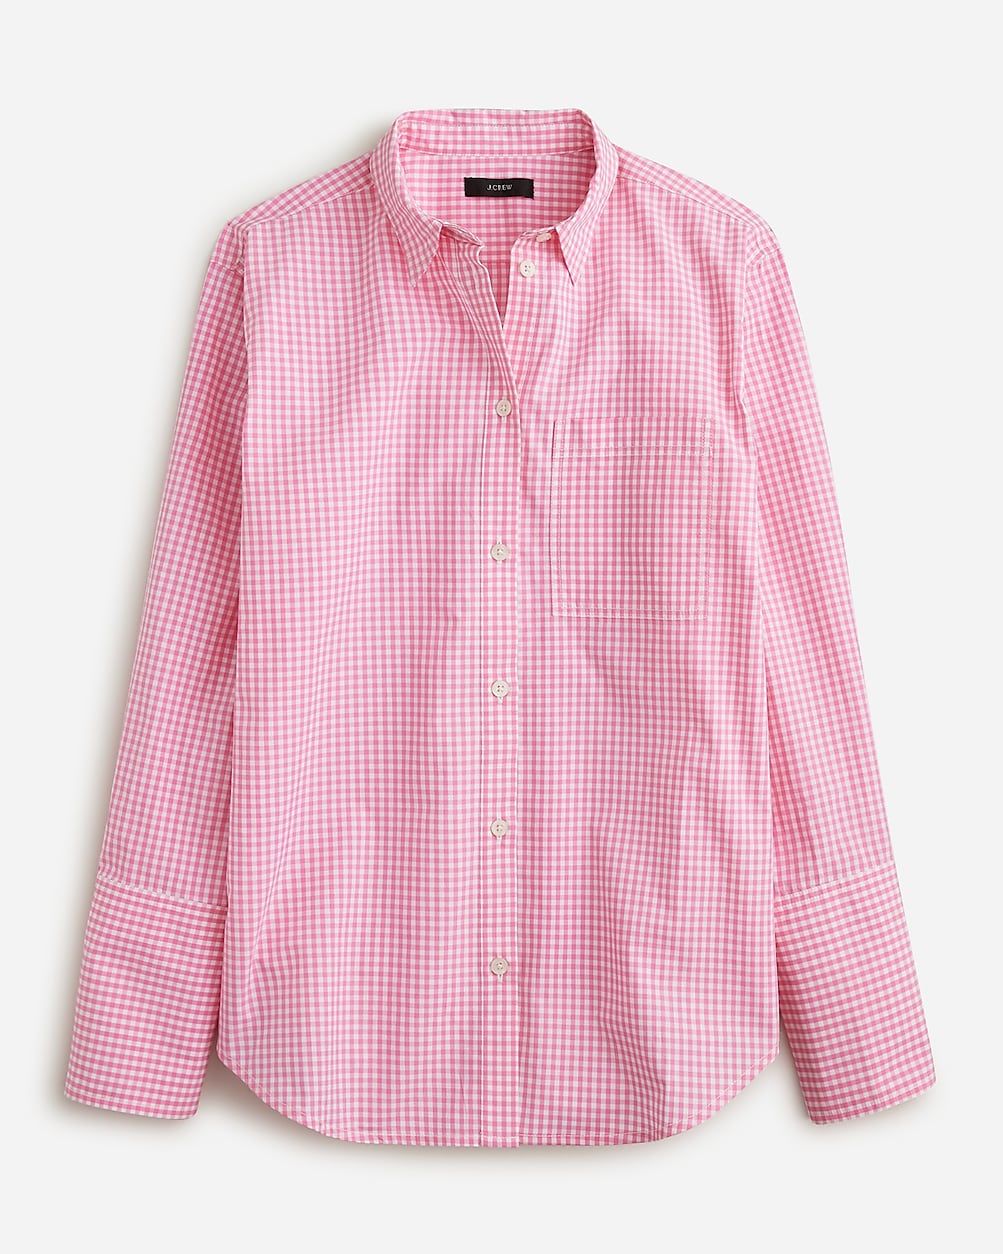 Garçon cotton poplin shirt in gingham | J.Crew US